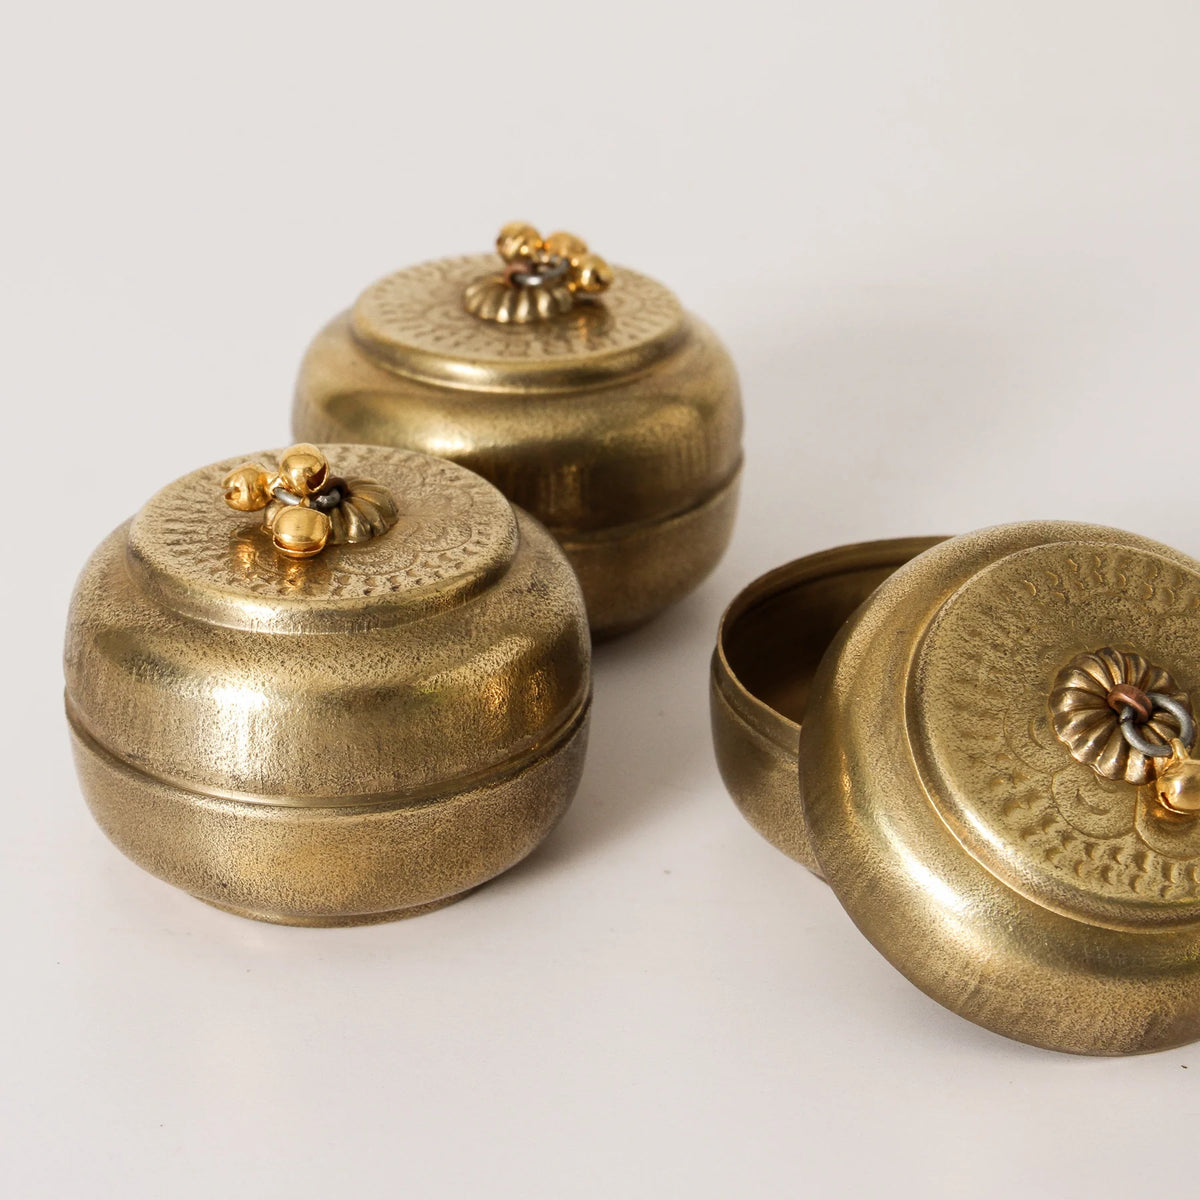 Mini Indian Brass Box